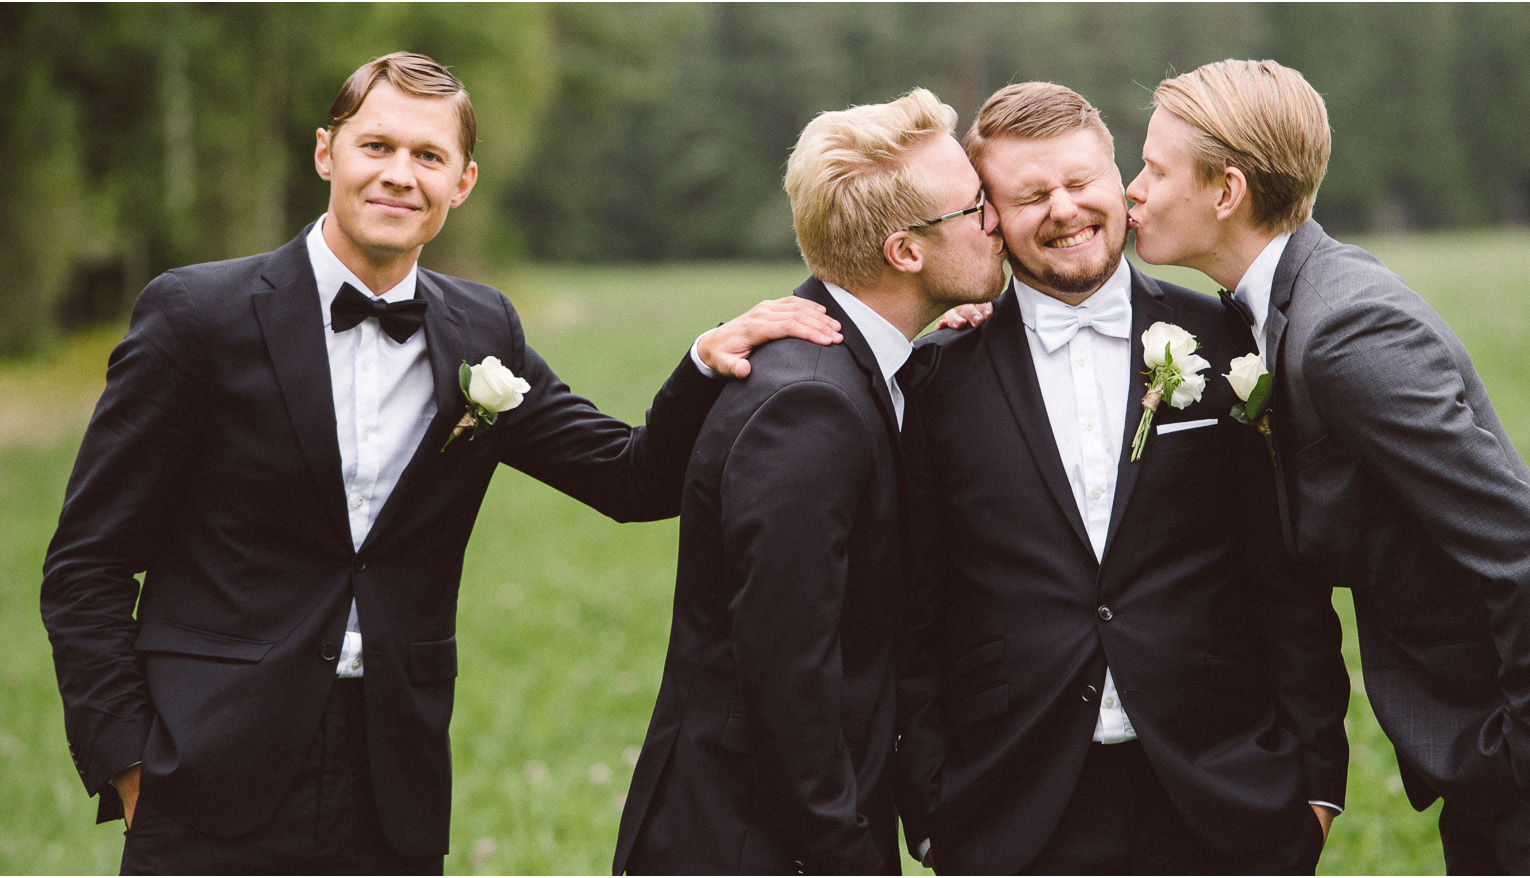 028-wedding-photographer-johan-lindqvist-in-sweden